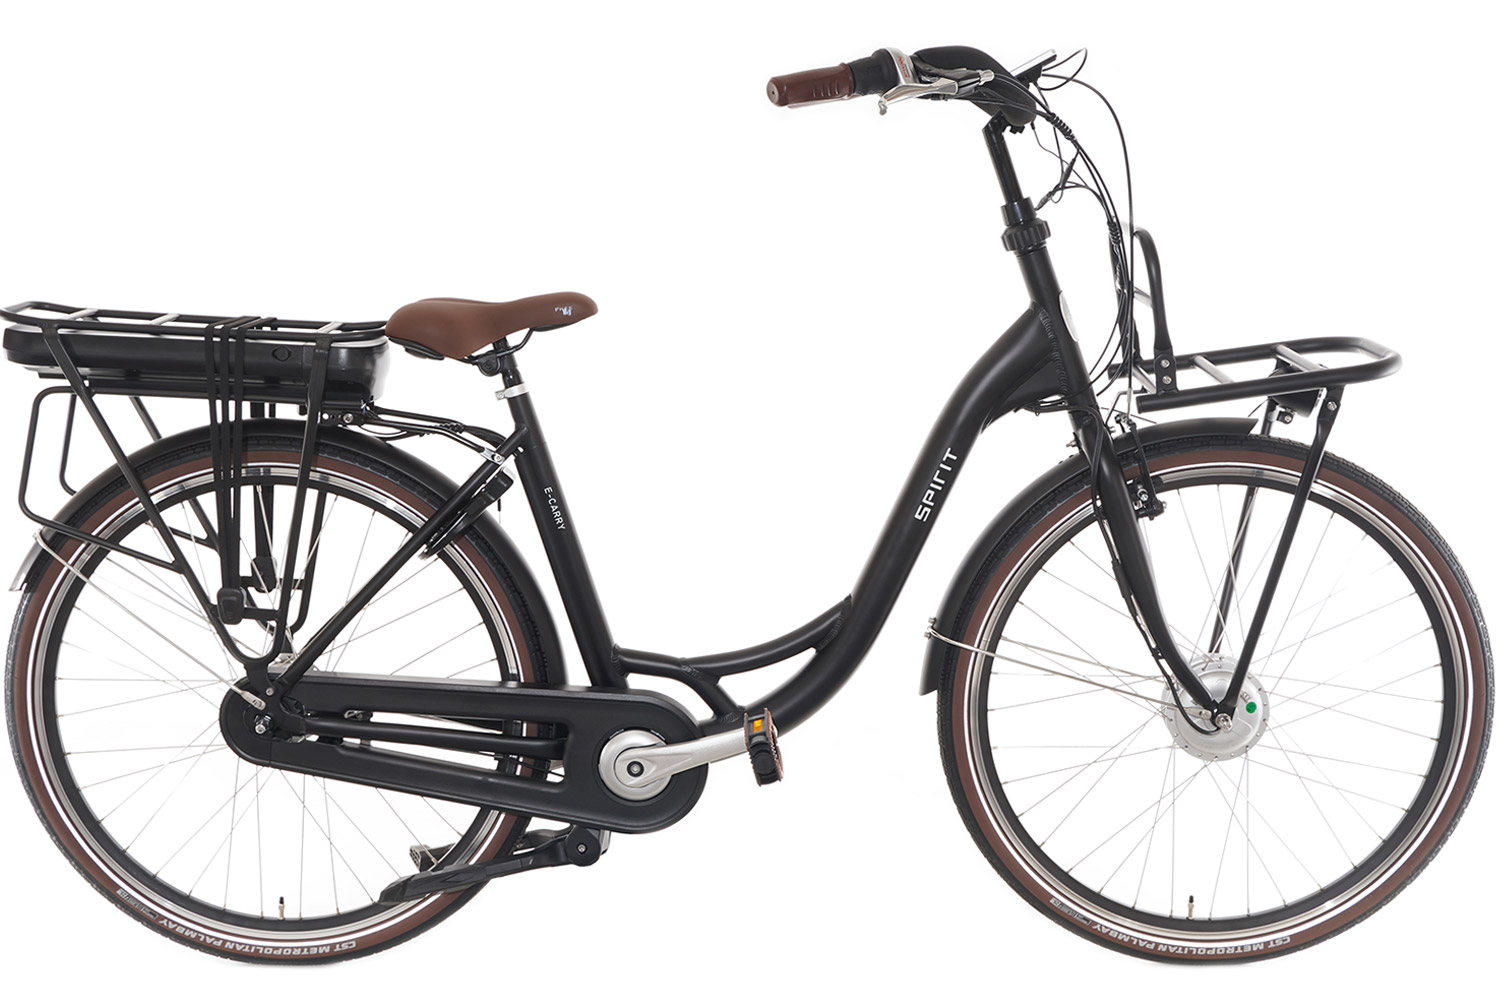 Bevatten Modieus diepte Spirit E-Carry N7 Elektrische Moederfiets Mat-Zwart | 1299,- Euro |  City-Bikes.nl